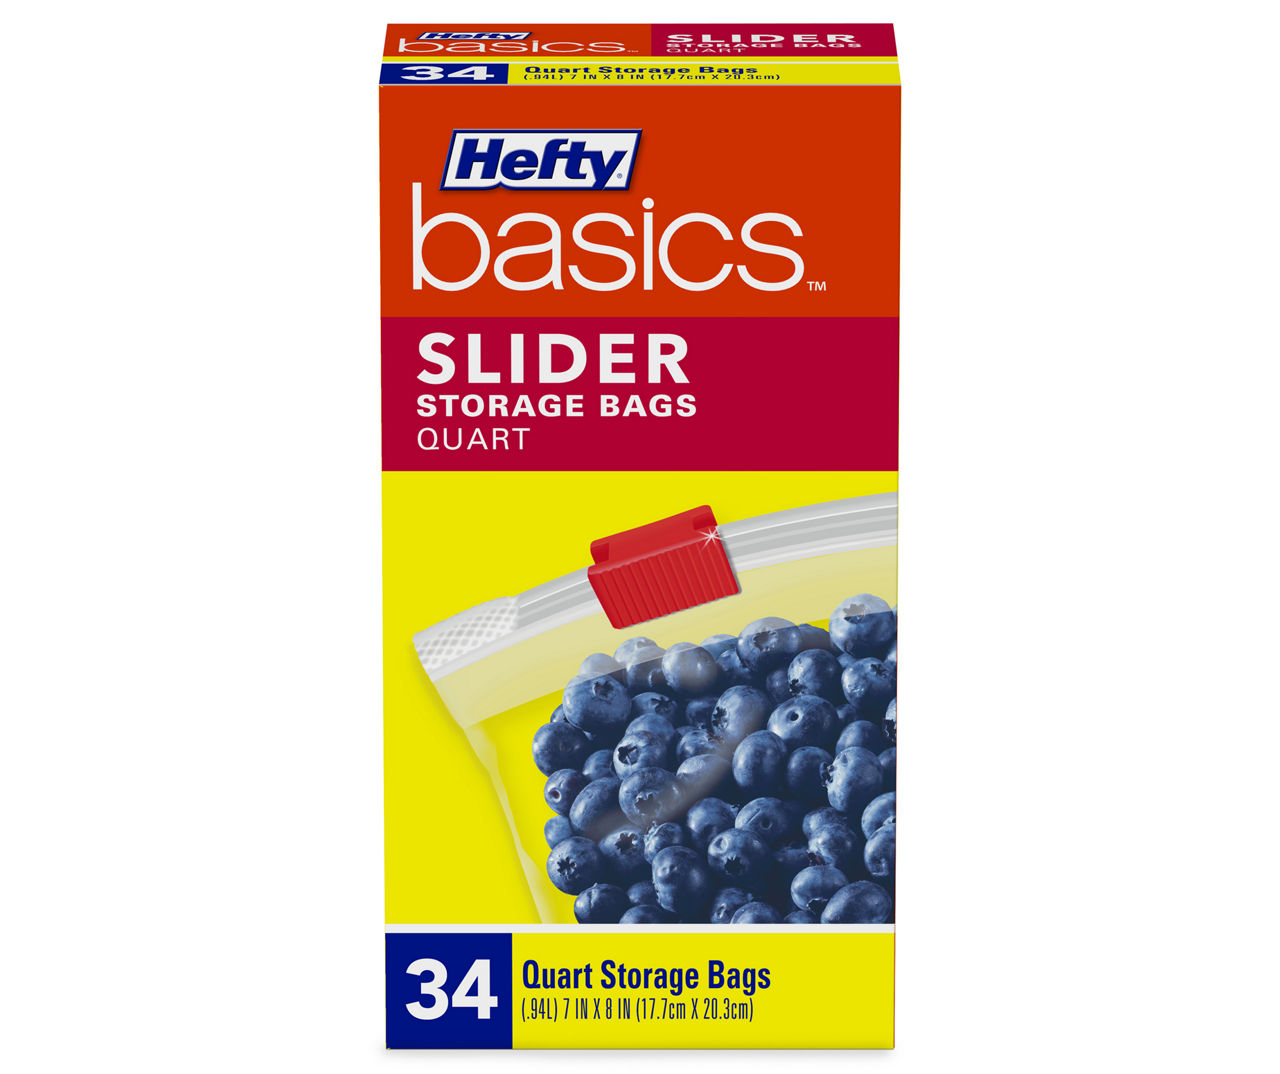 Hefty Basics 1-Quart Slider Storage Bags, 34-Count